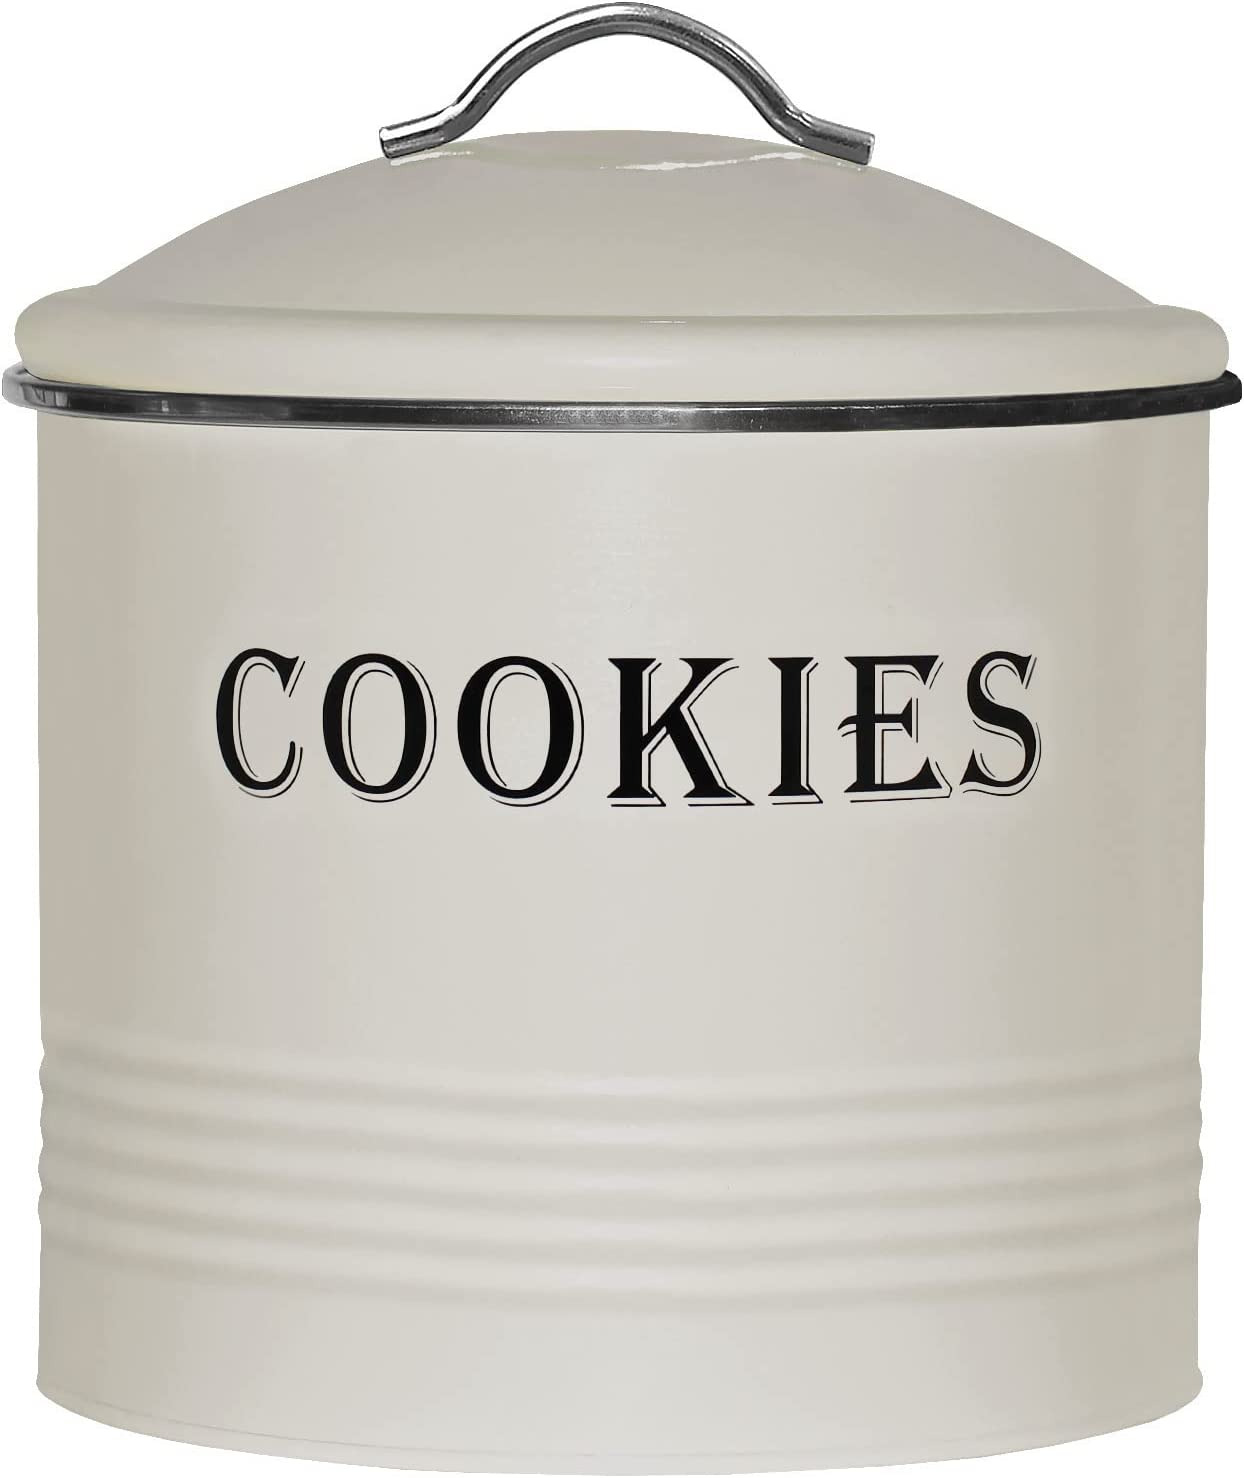 Blue Donuts Vintage Cookie Jar - Cookie Jars for Kitchen Counter, Airtight Jar C